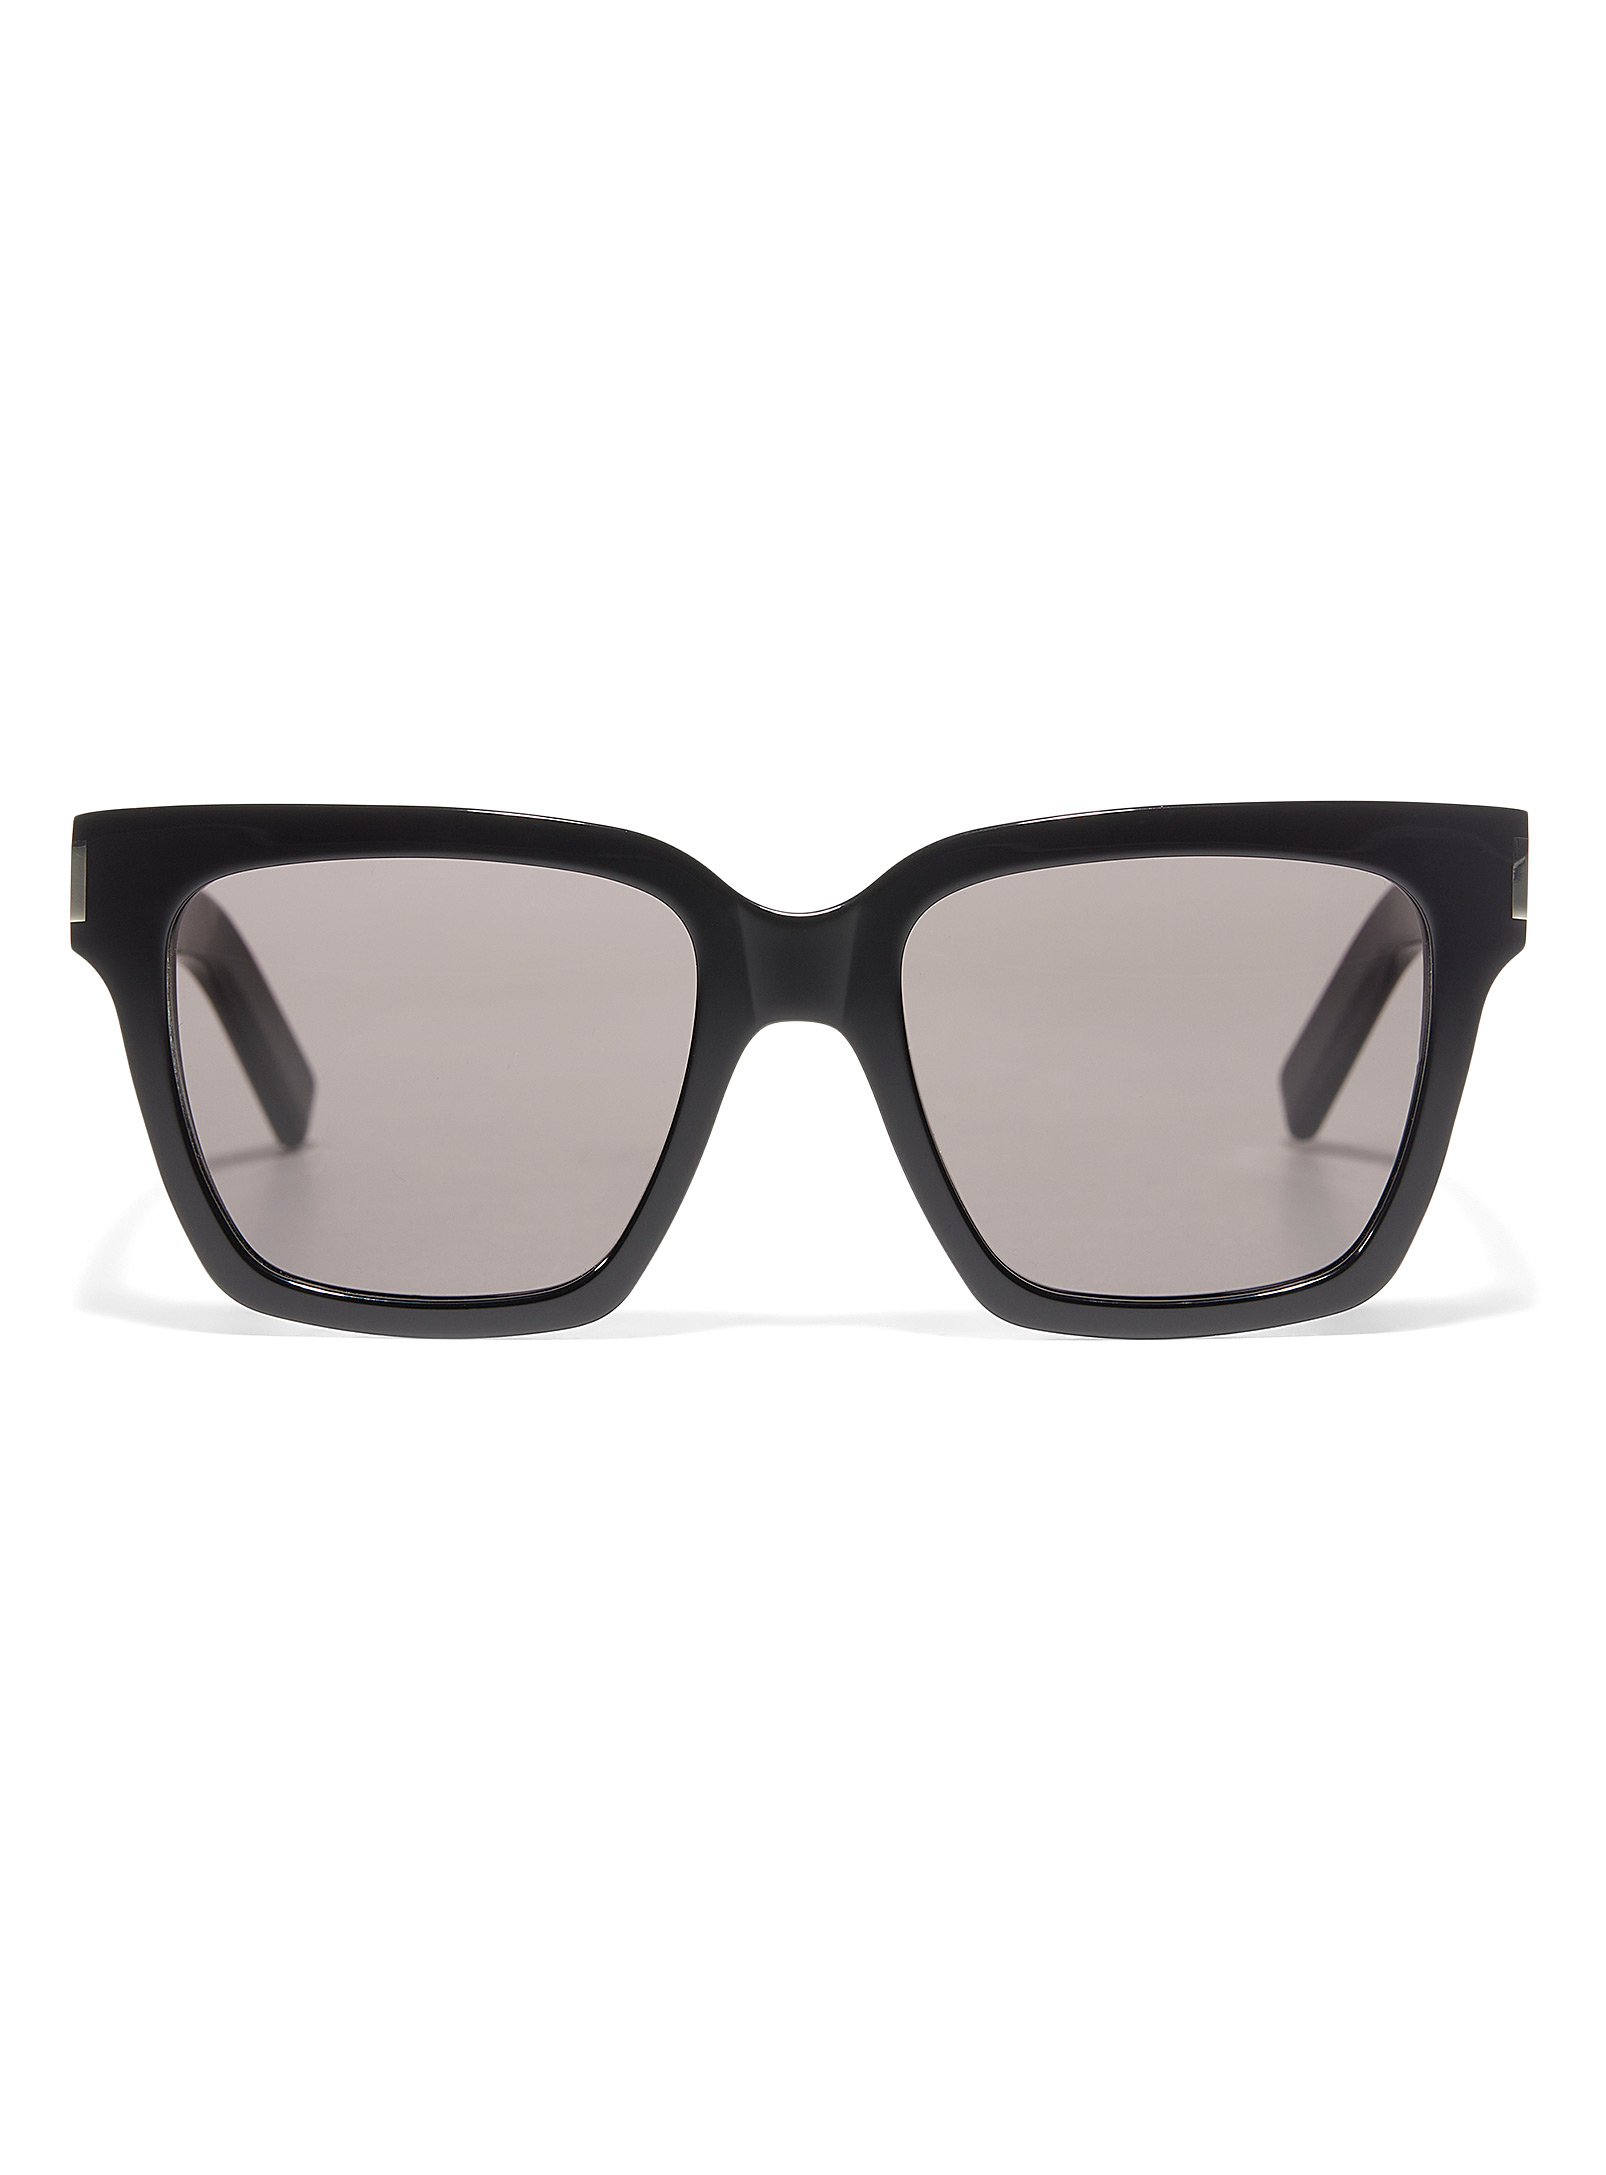 Saint Laurent - Glossy black square sunglasses